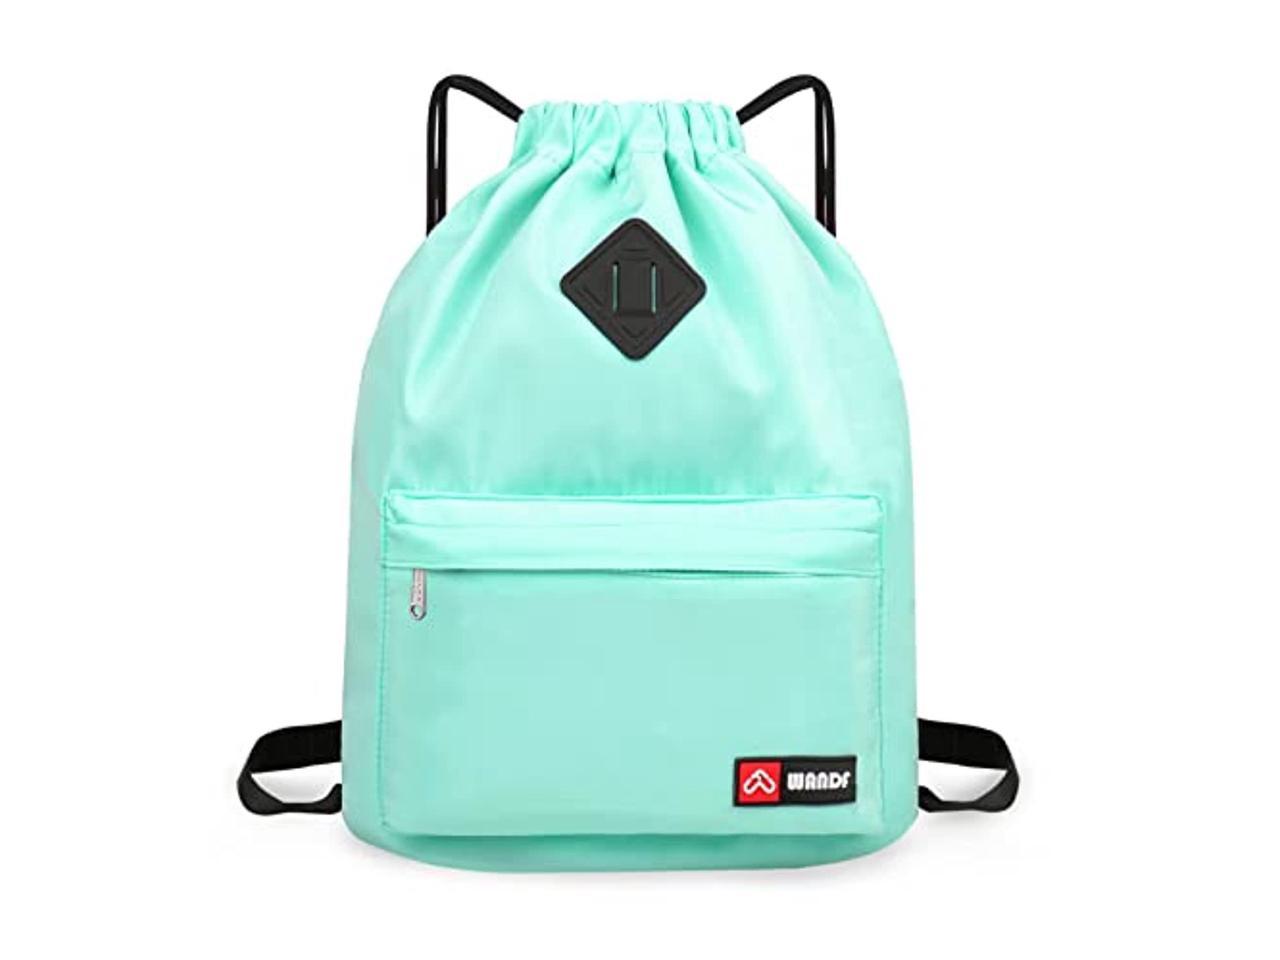 wandf drawstring backpack with shoe pocket, string bag sackpack cinch ...